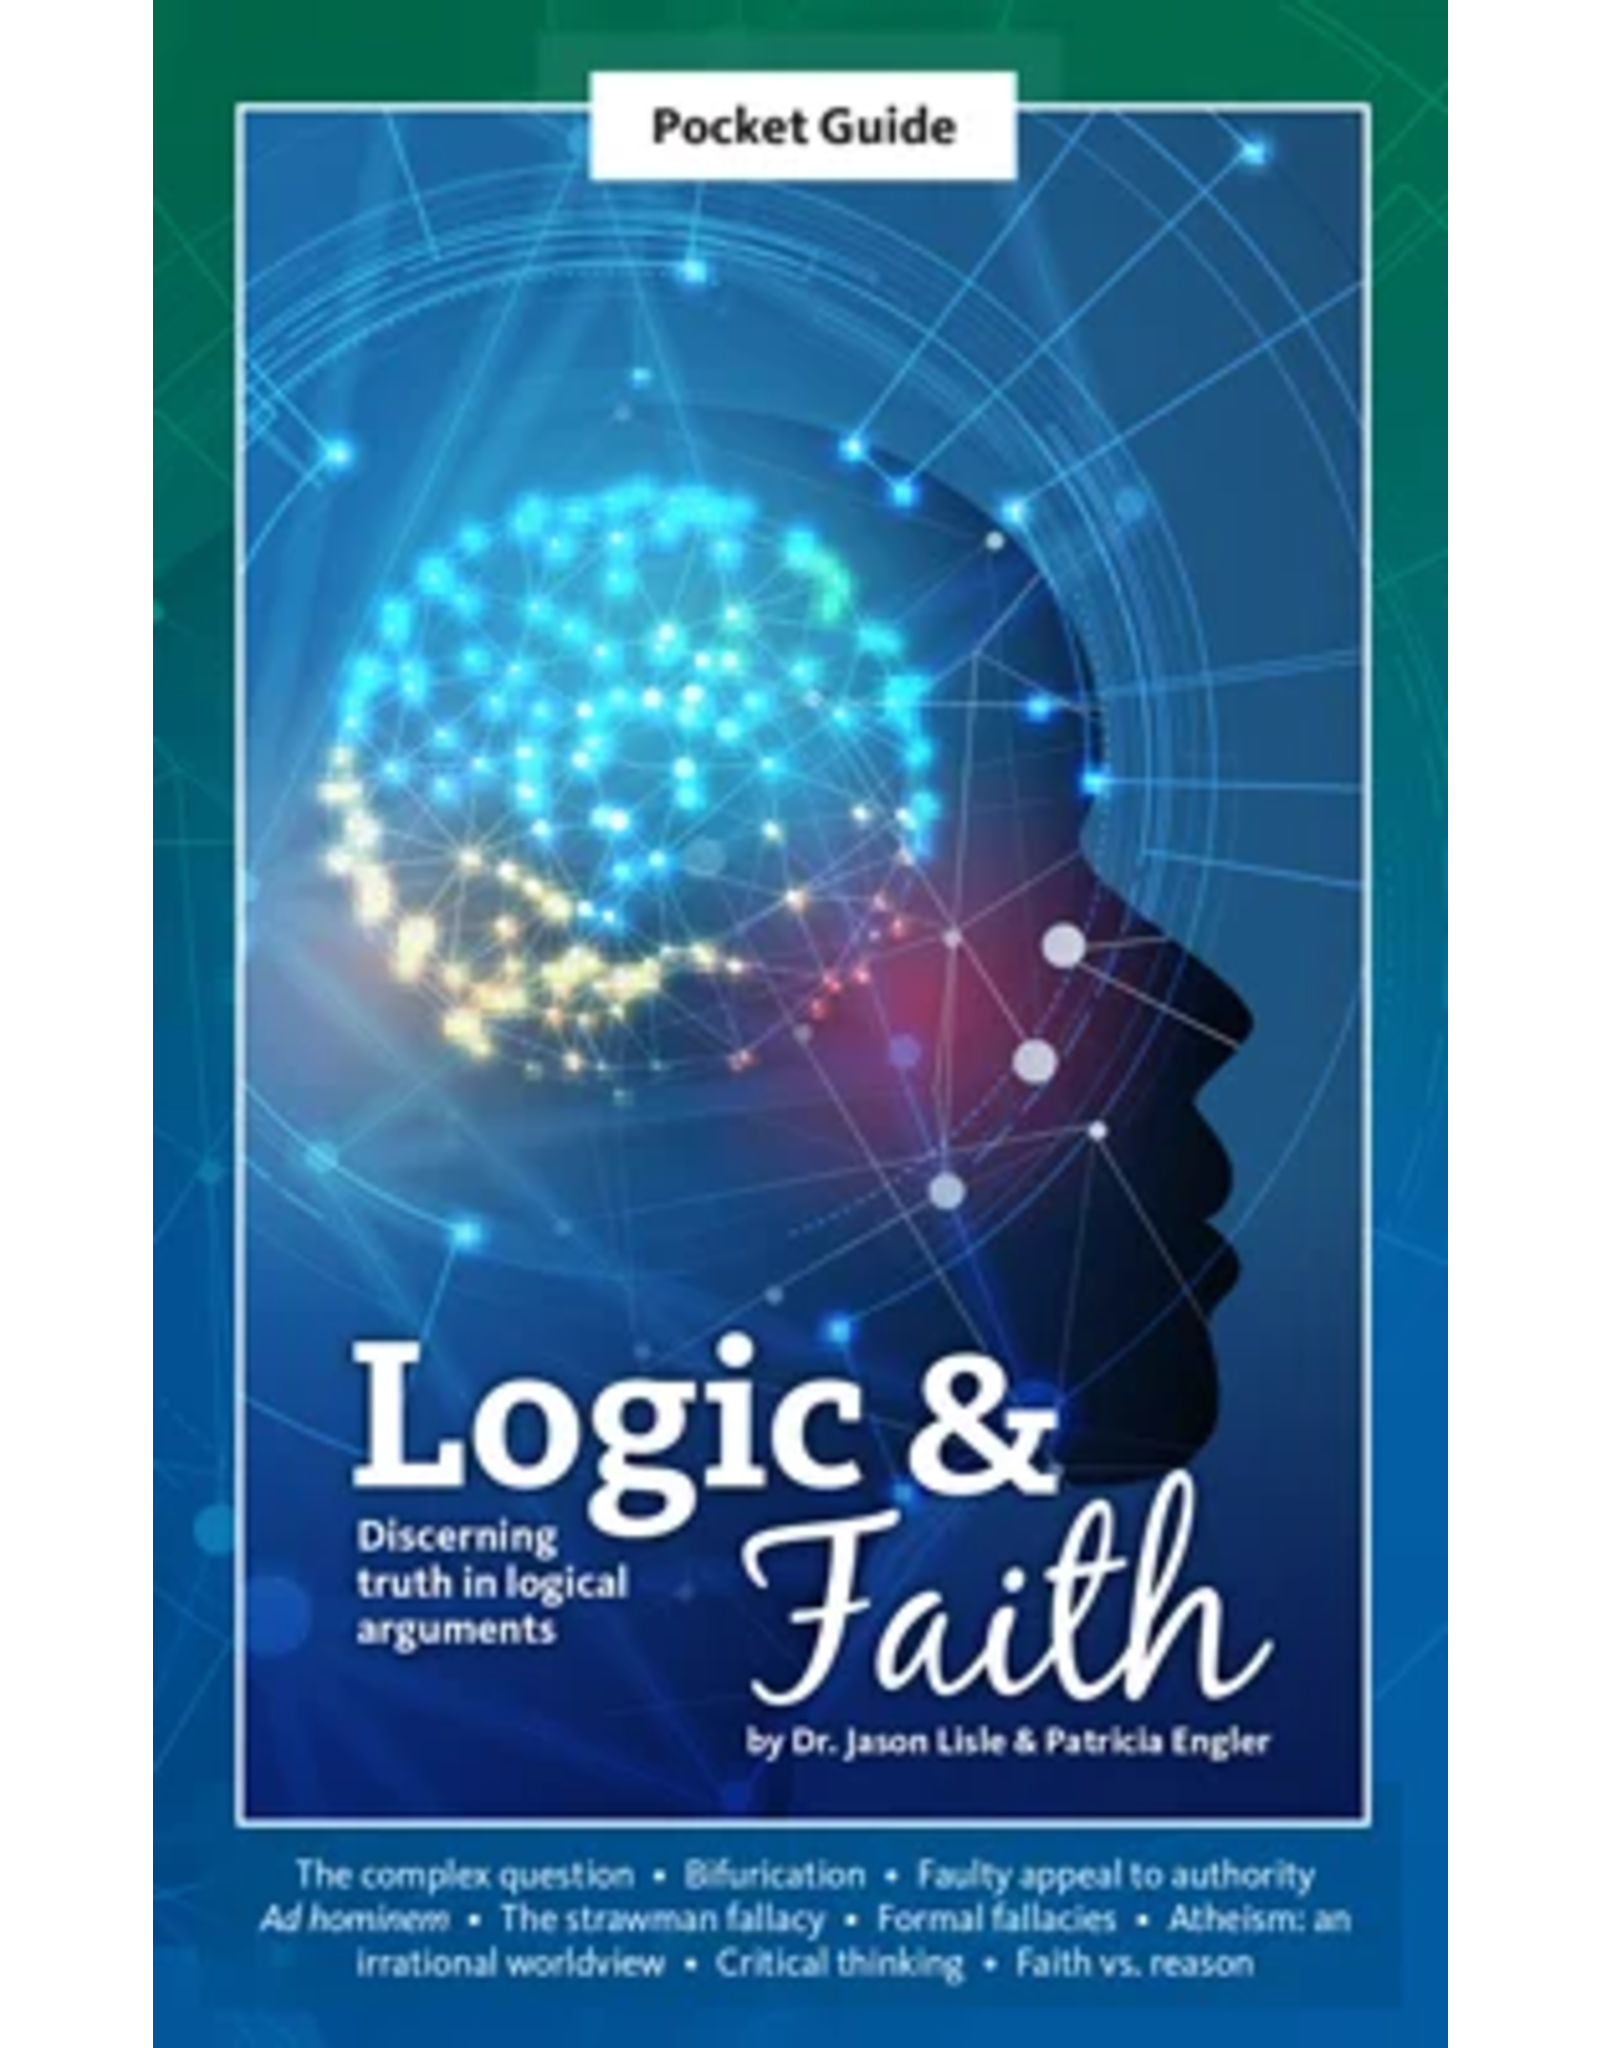 jason lisle Pocket Guide - Logic and Faith